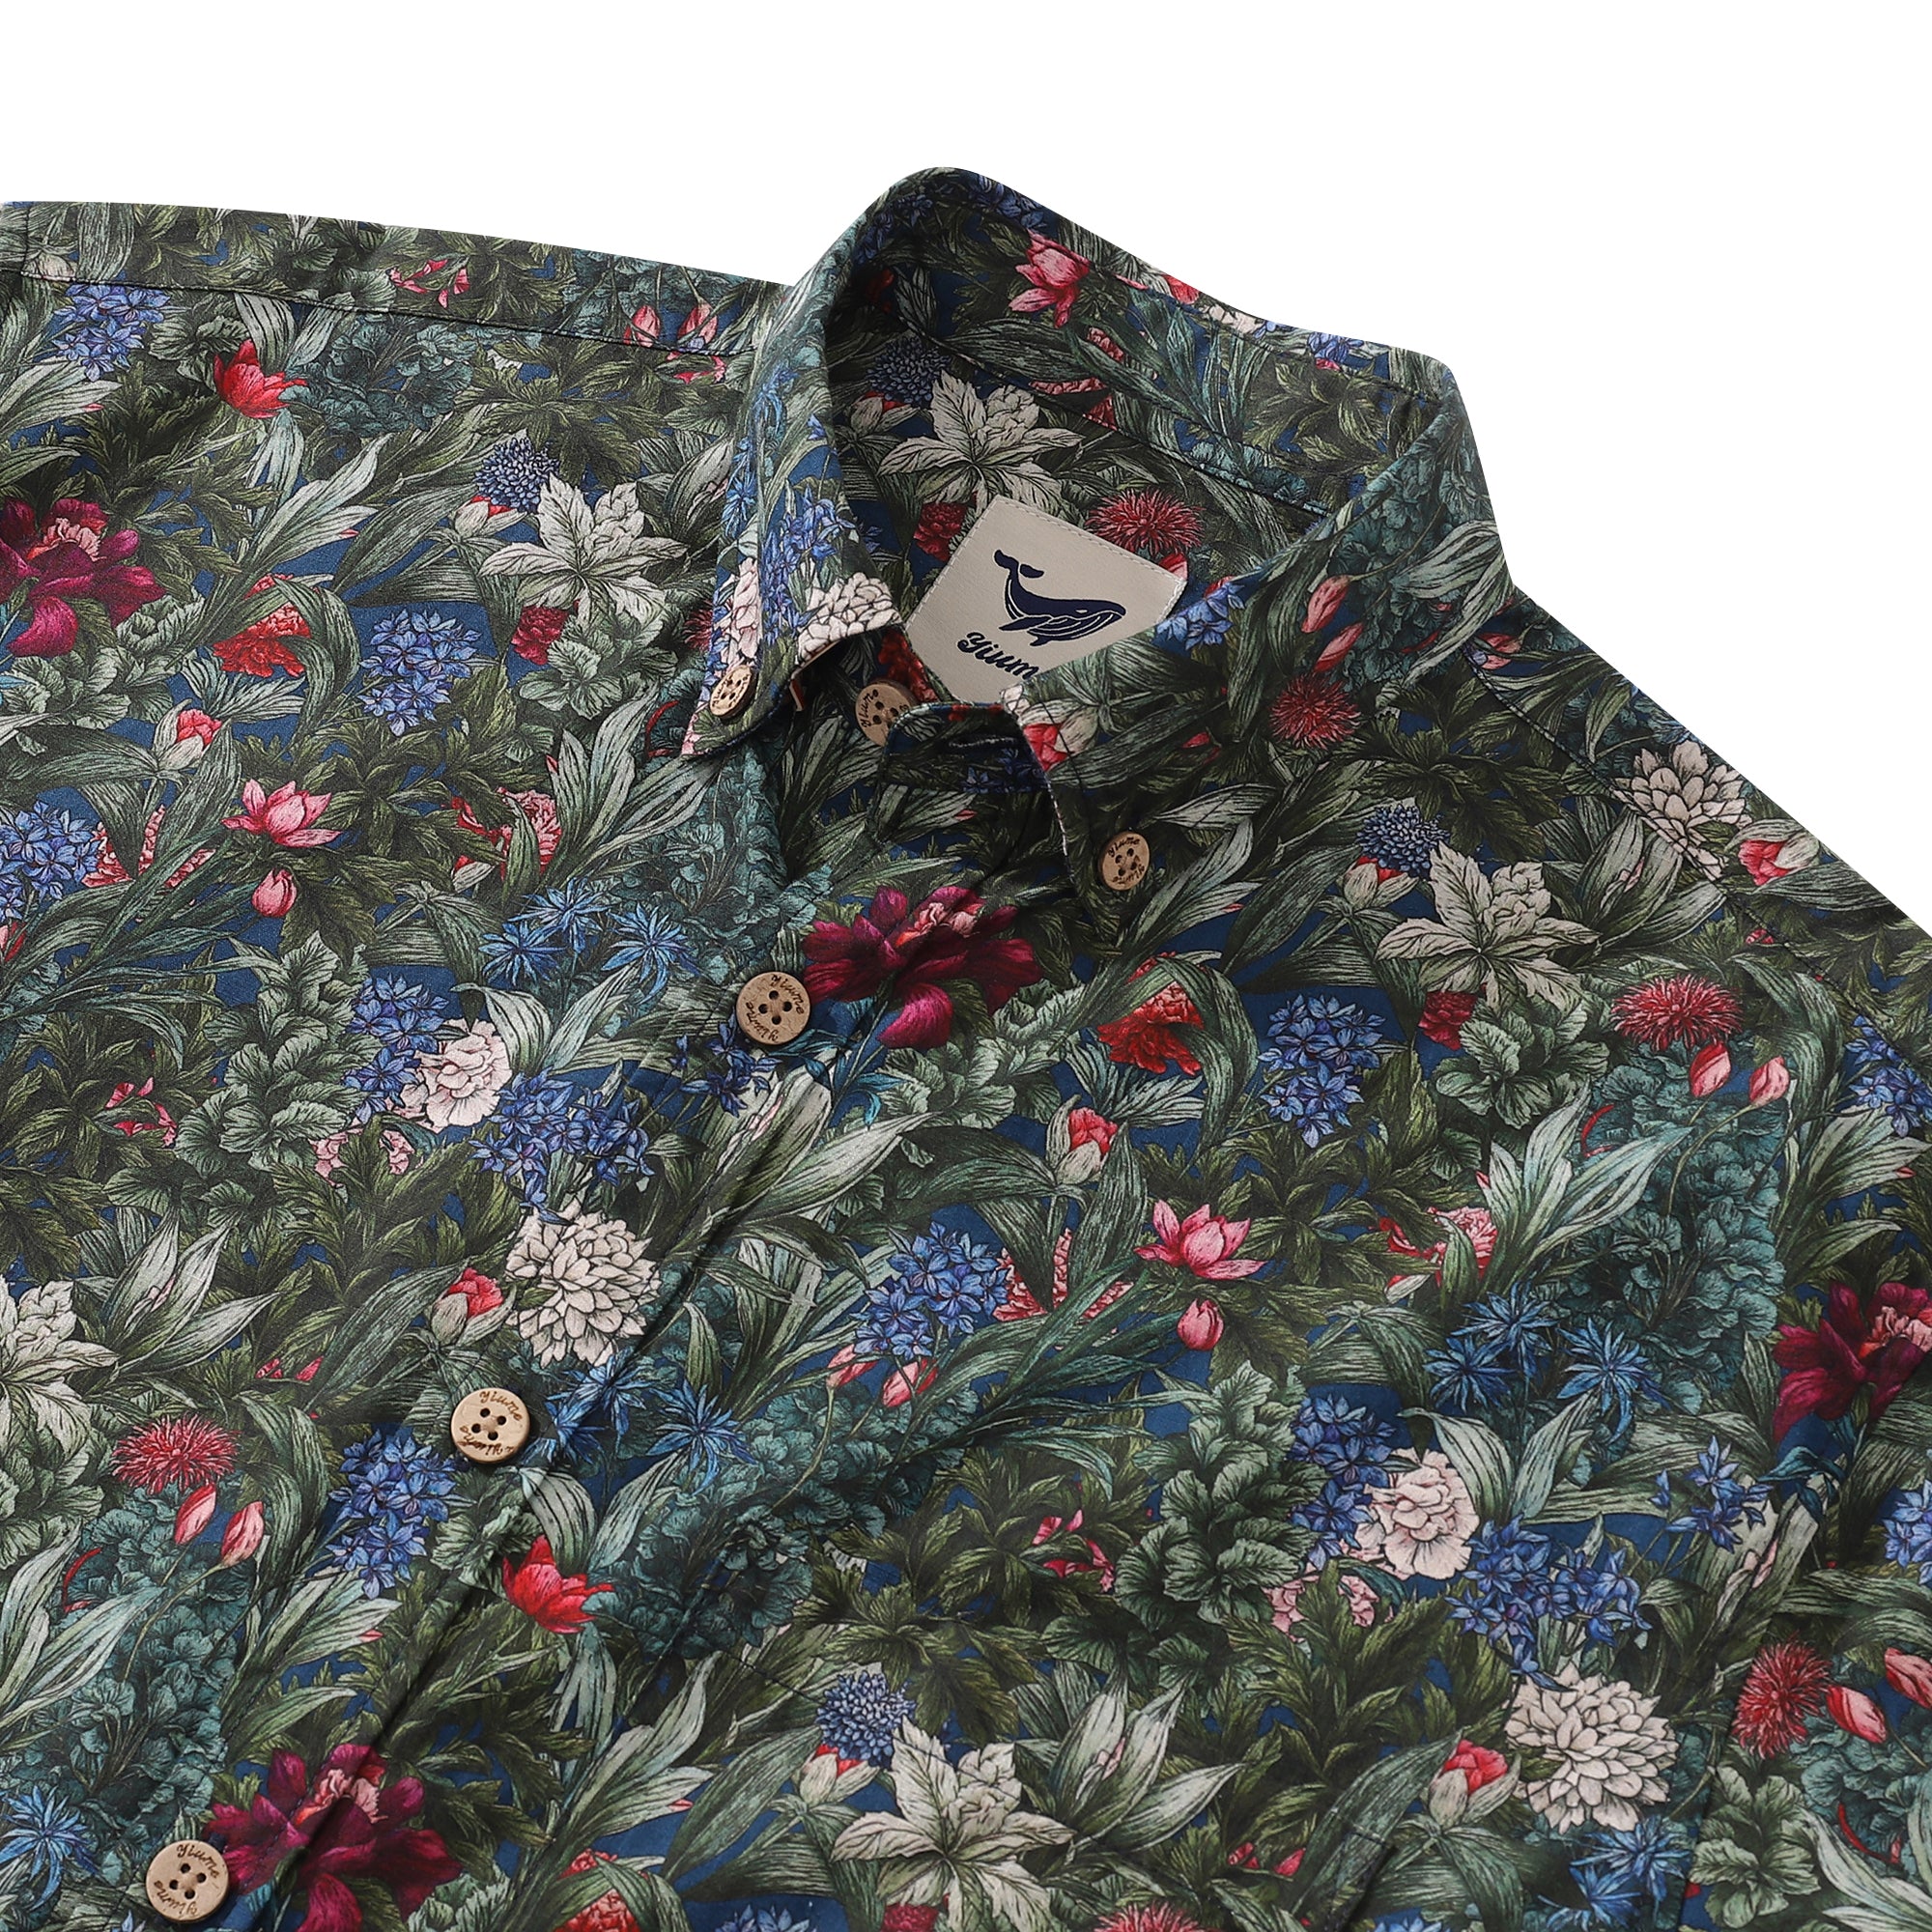 Men's Hawaiian Shirt Hydrangeas and Roses Cotton Button-down Long Sleeve Aloha Shirt